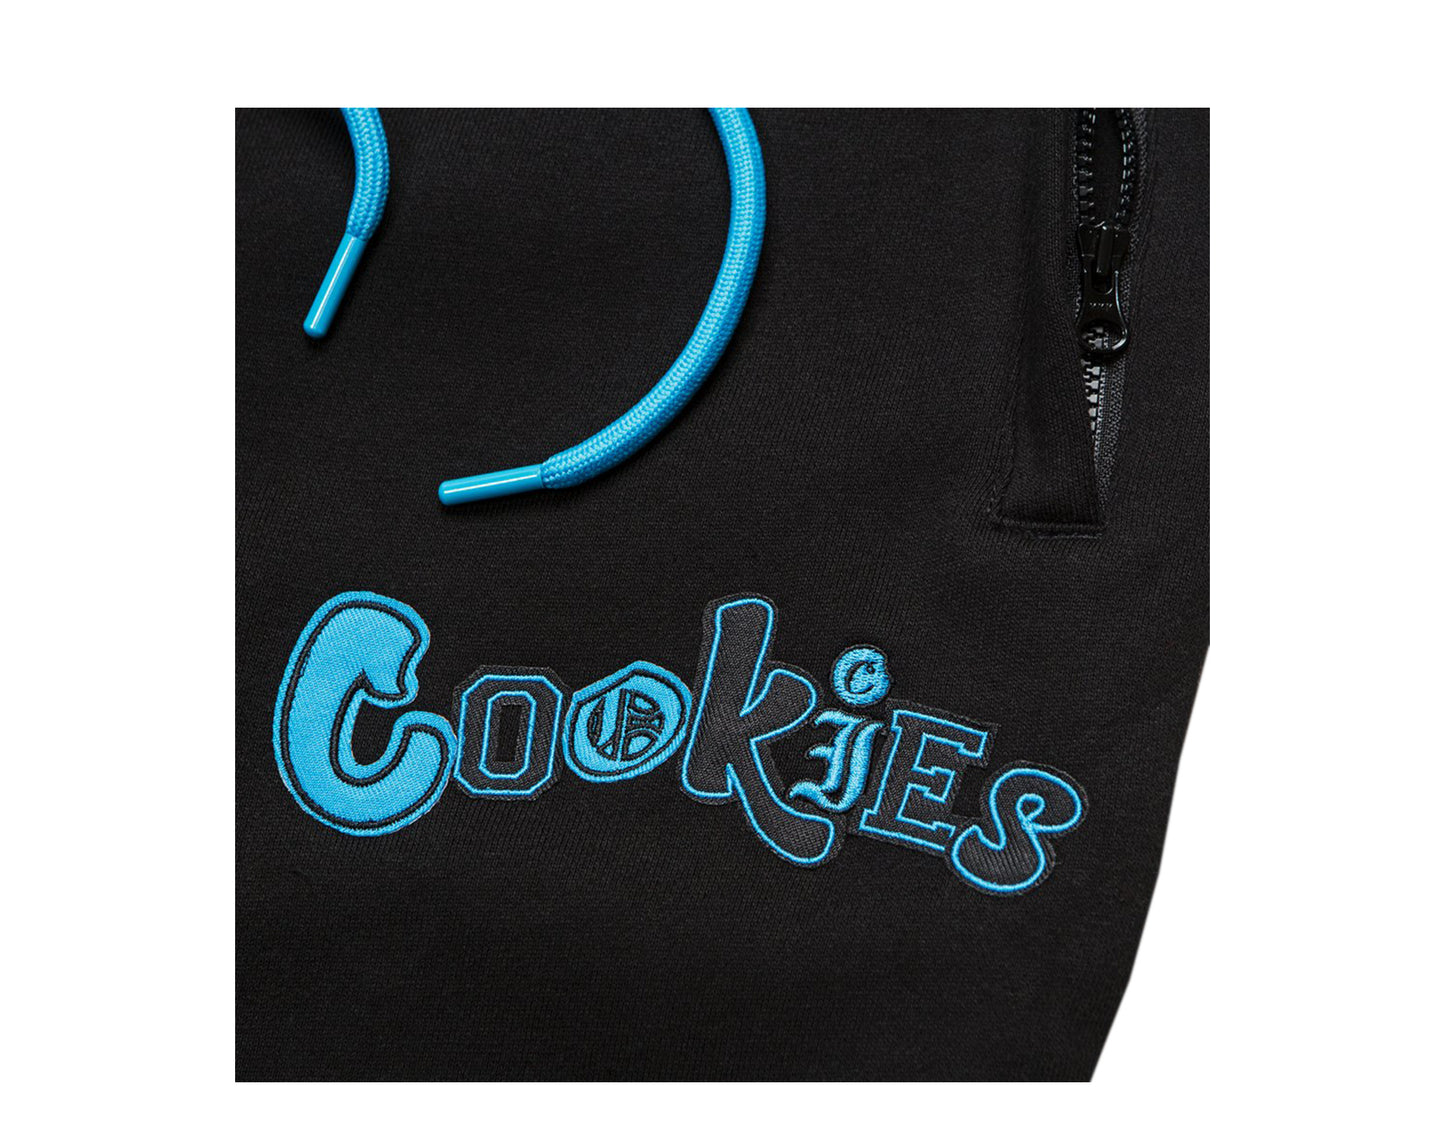 Cookies City Limits Fleece Printed Applique Black/Blue Sweatpants 1545B4112-BLK